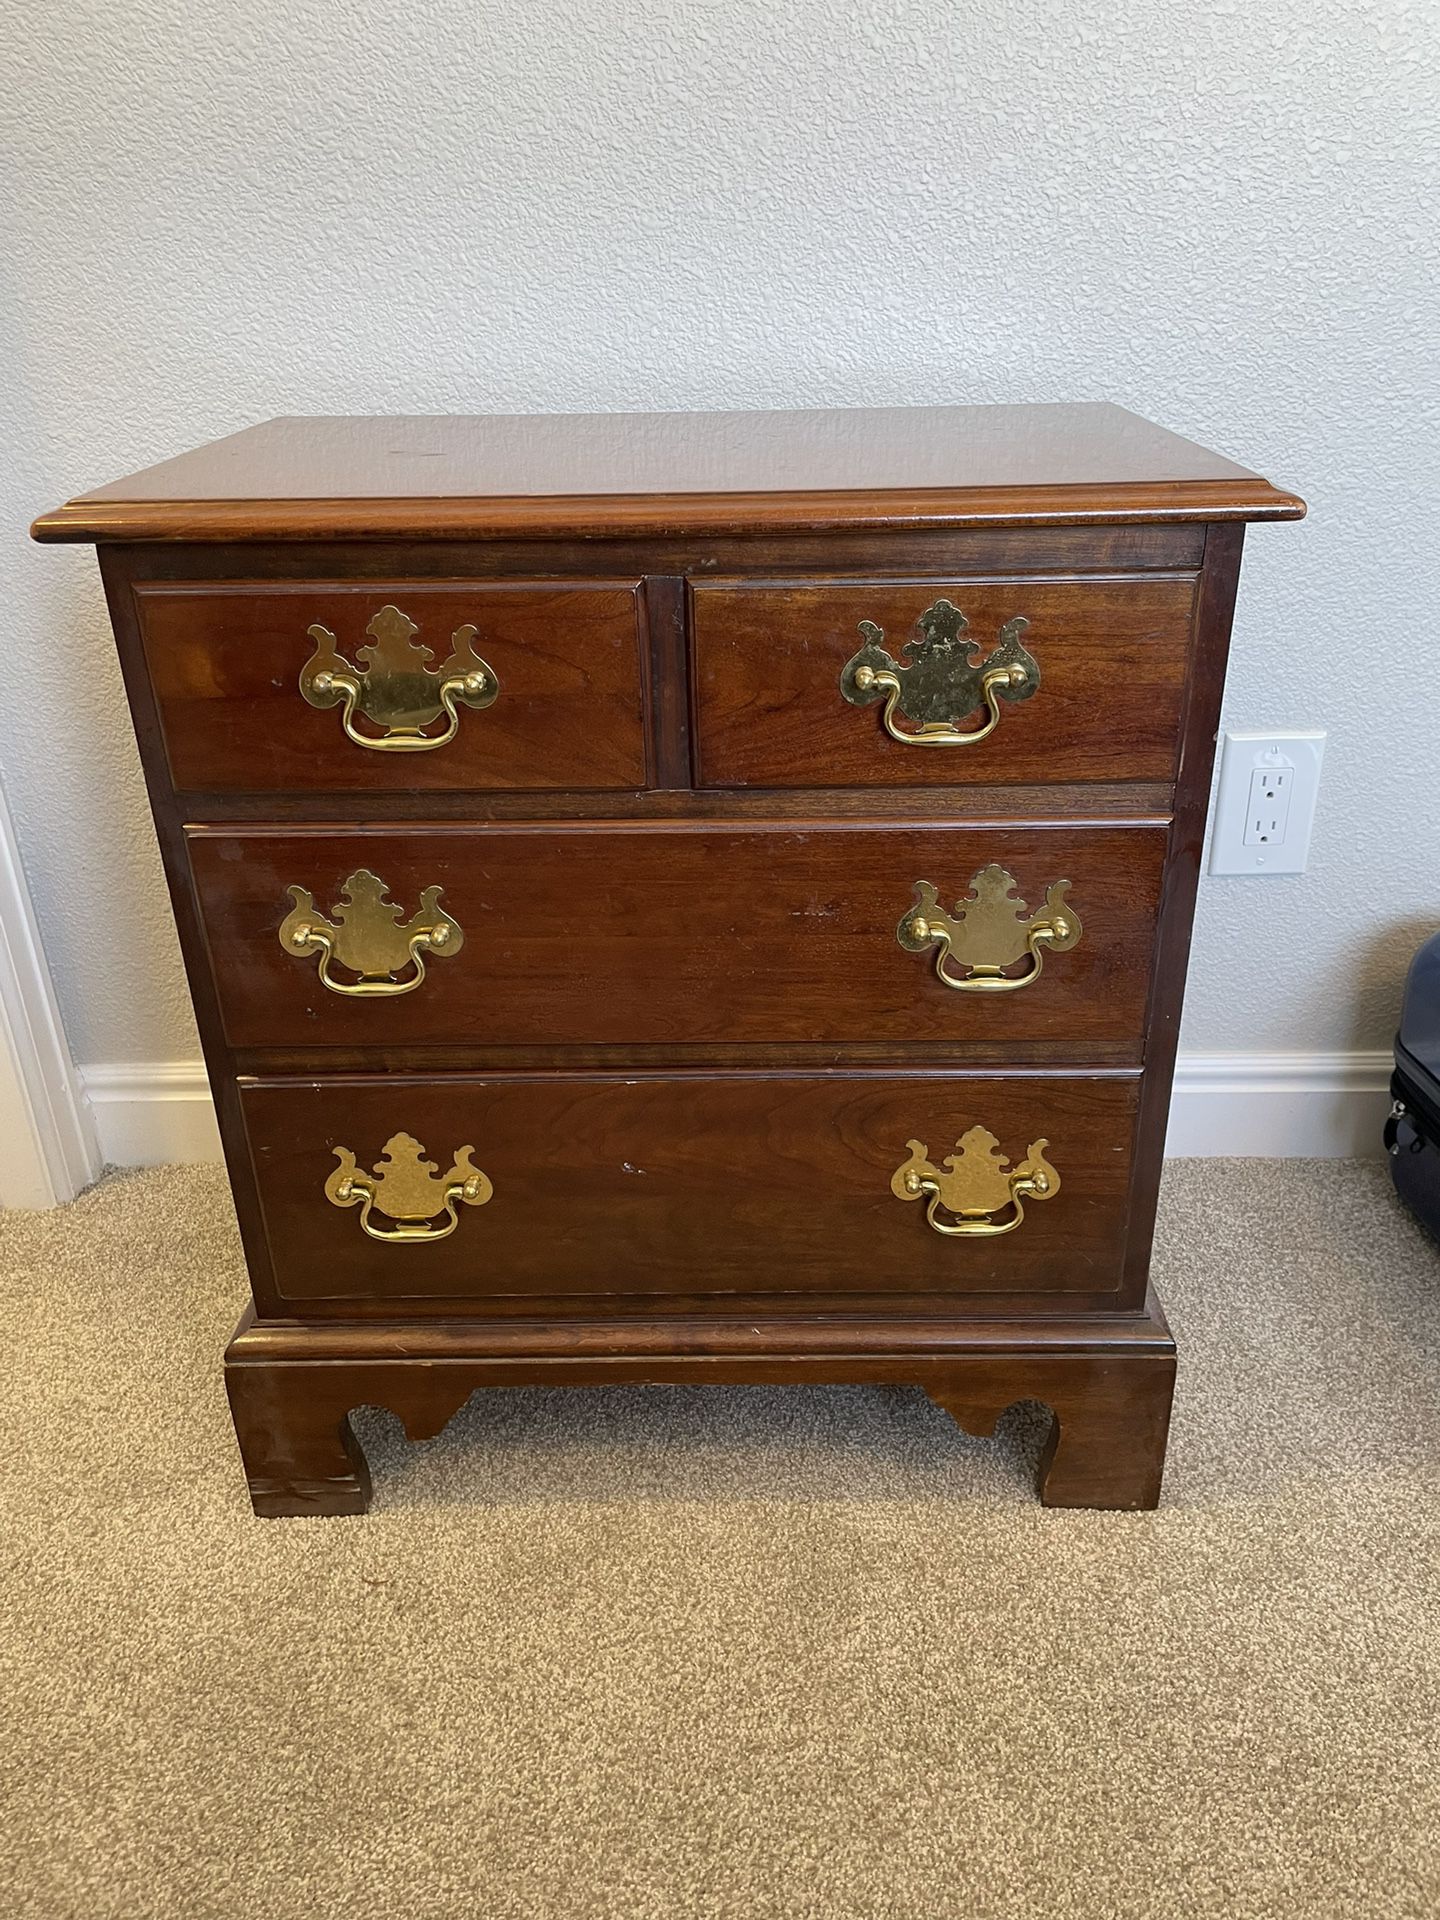 council bedside dresser ( antique )